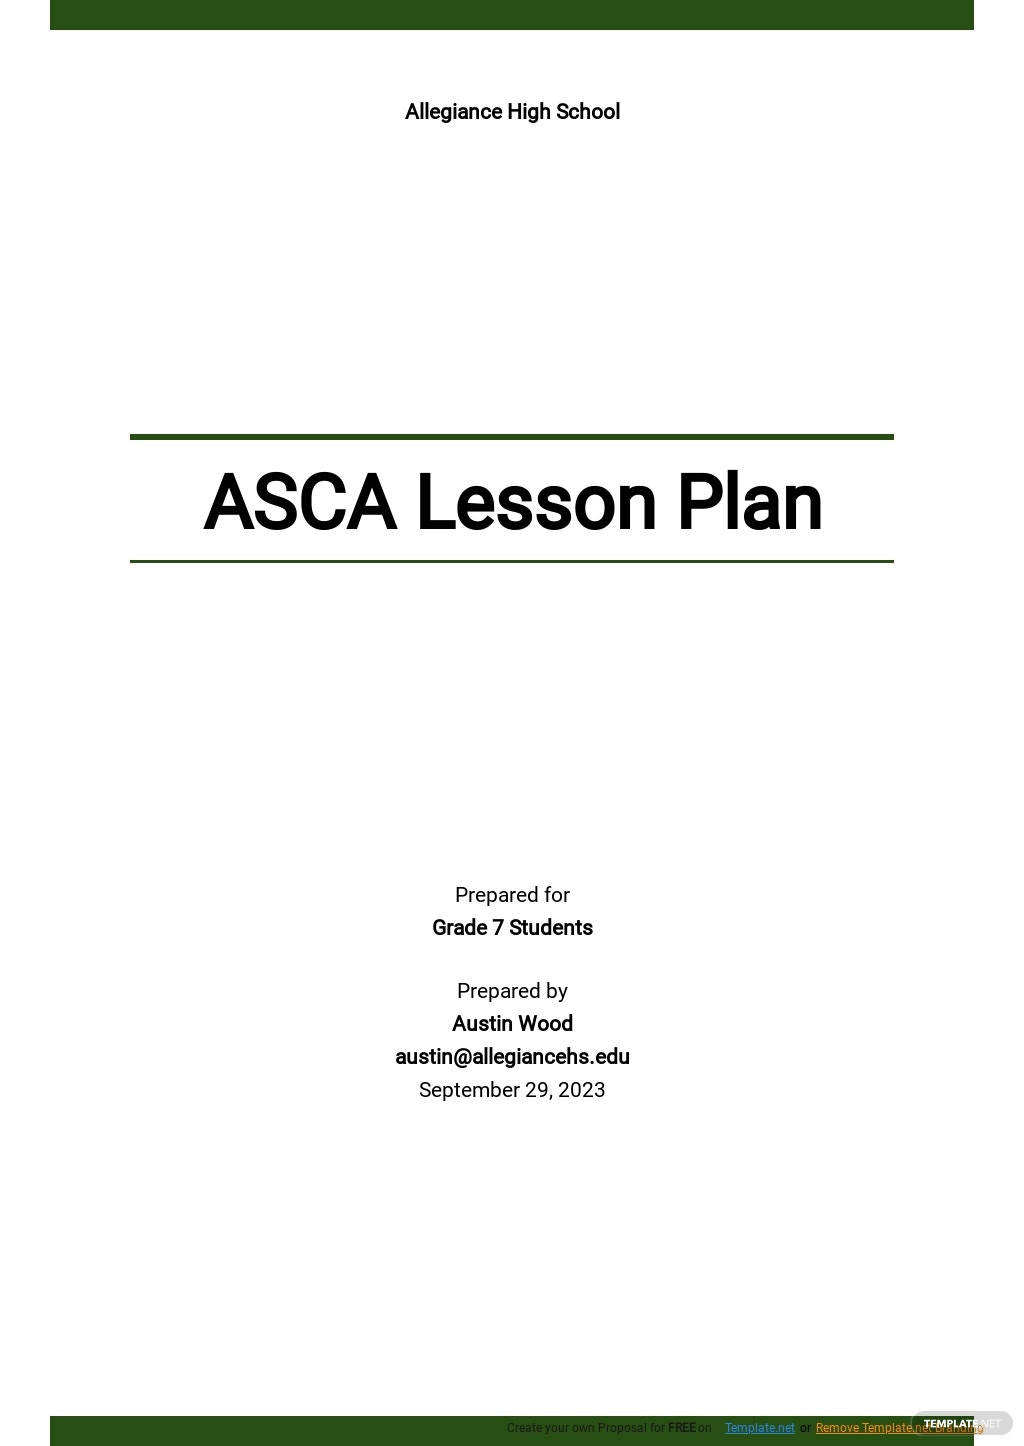 asca lesson plan template